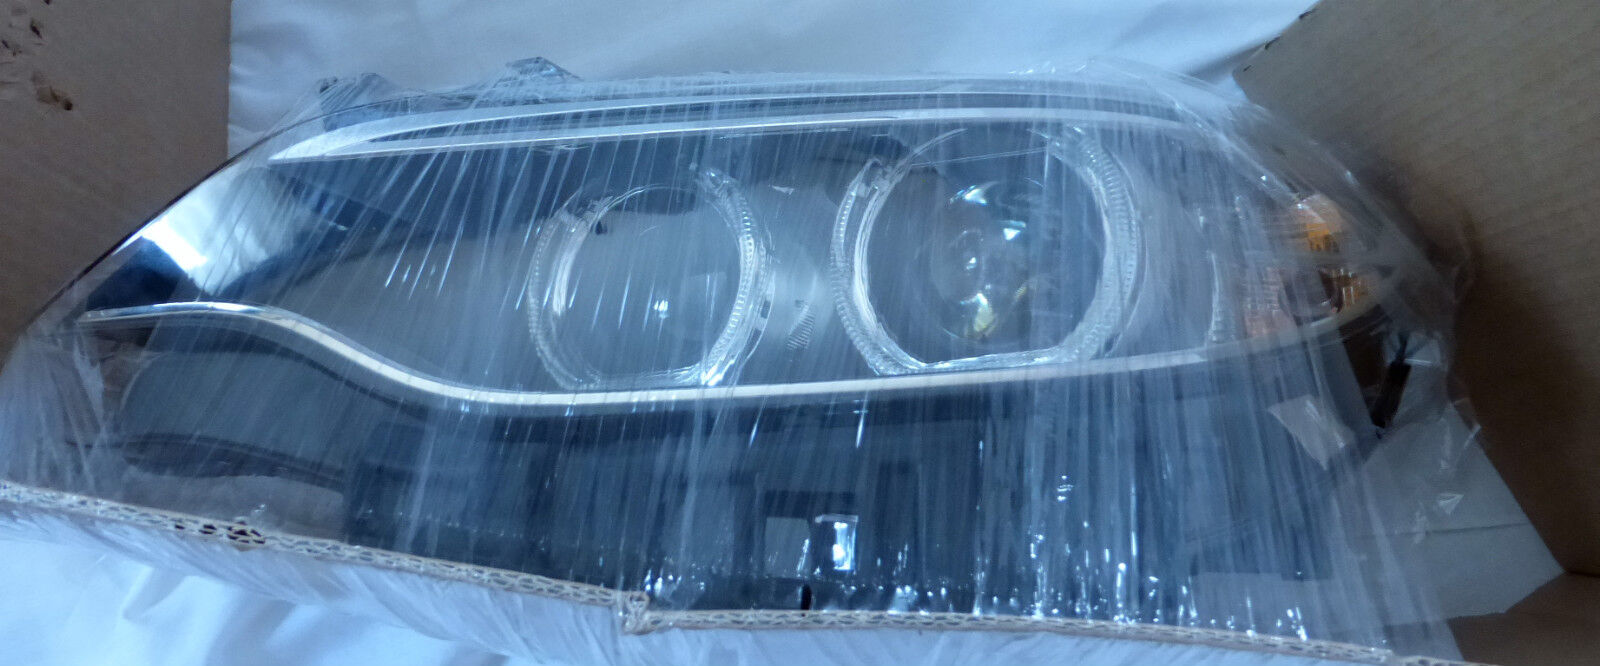 BMW OEM F22 F23 2 Series Euro Spec Xenon AKL Left Headlight Headlamp Assembly